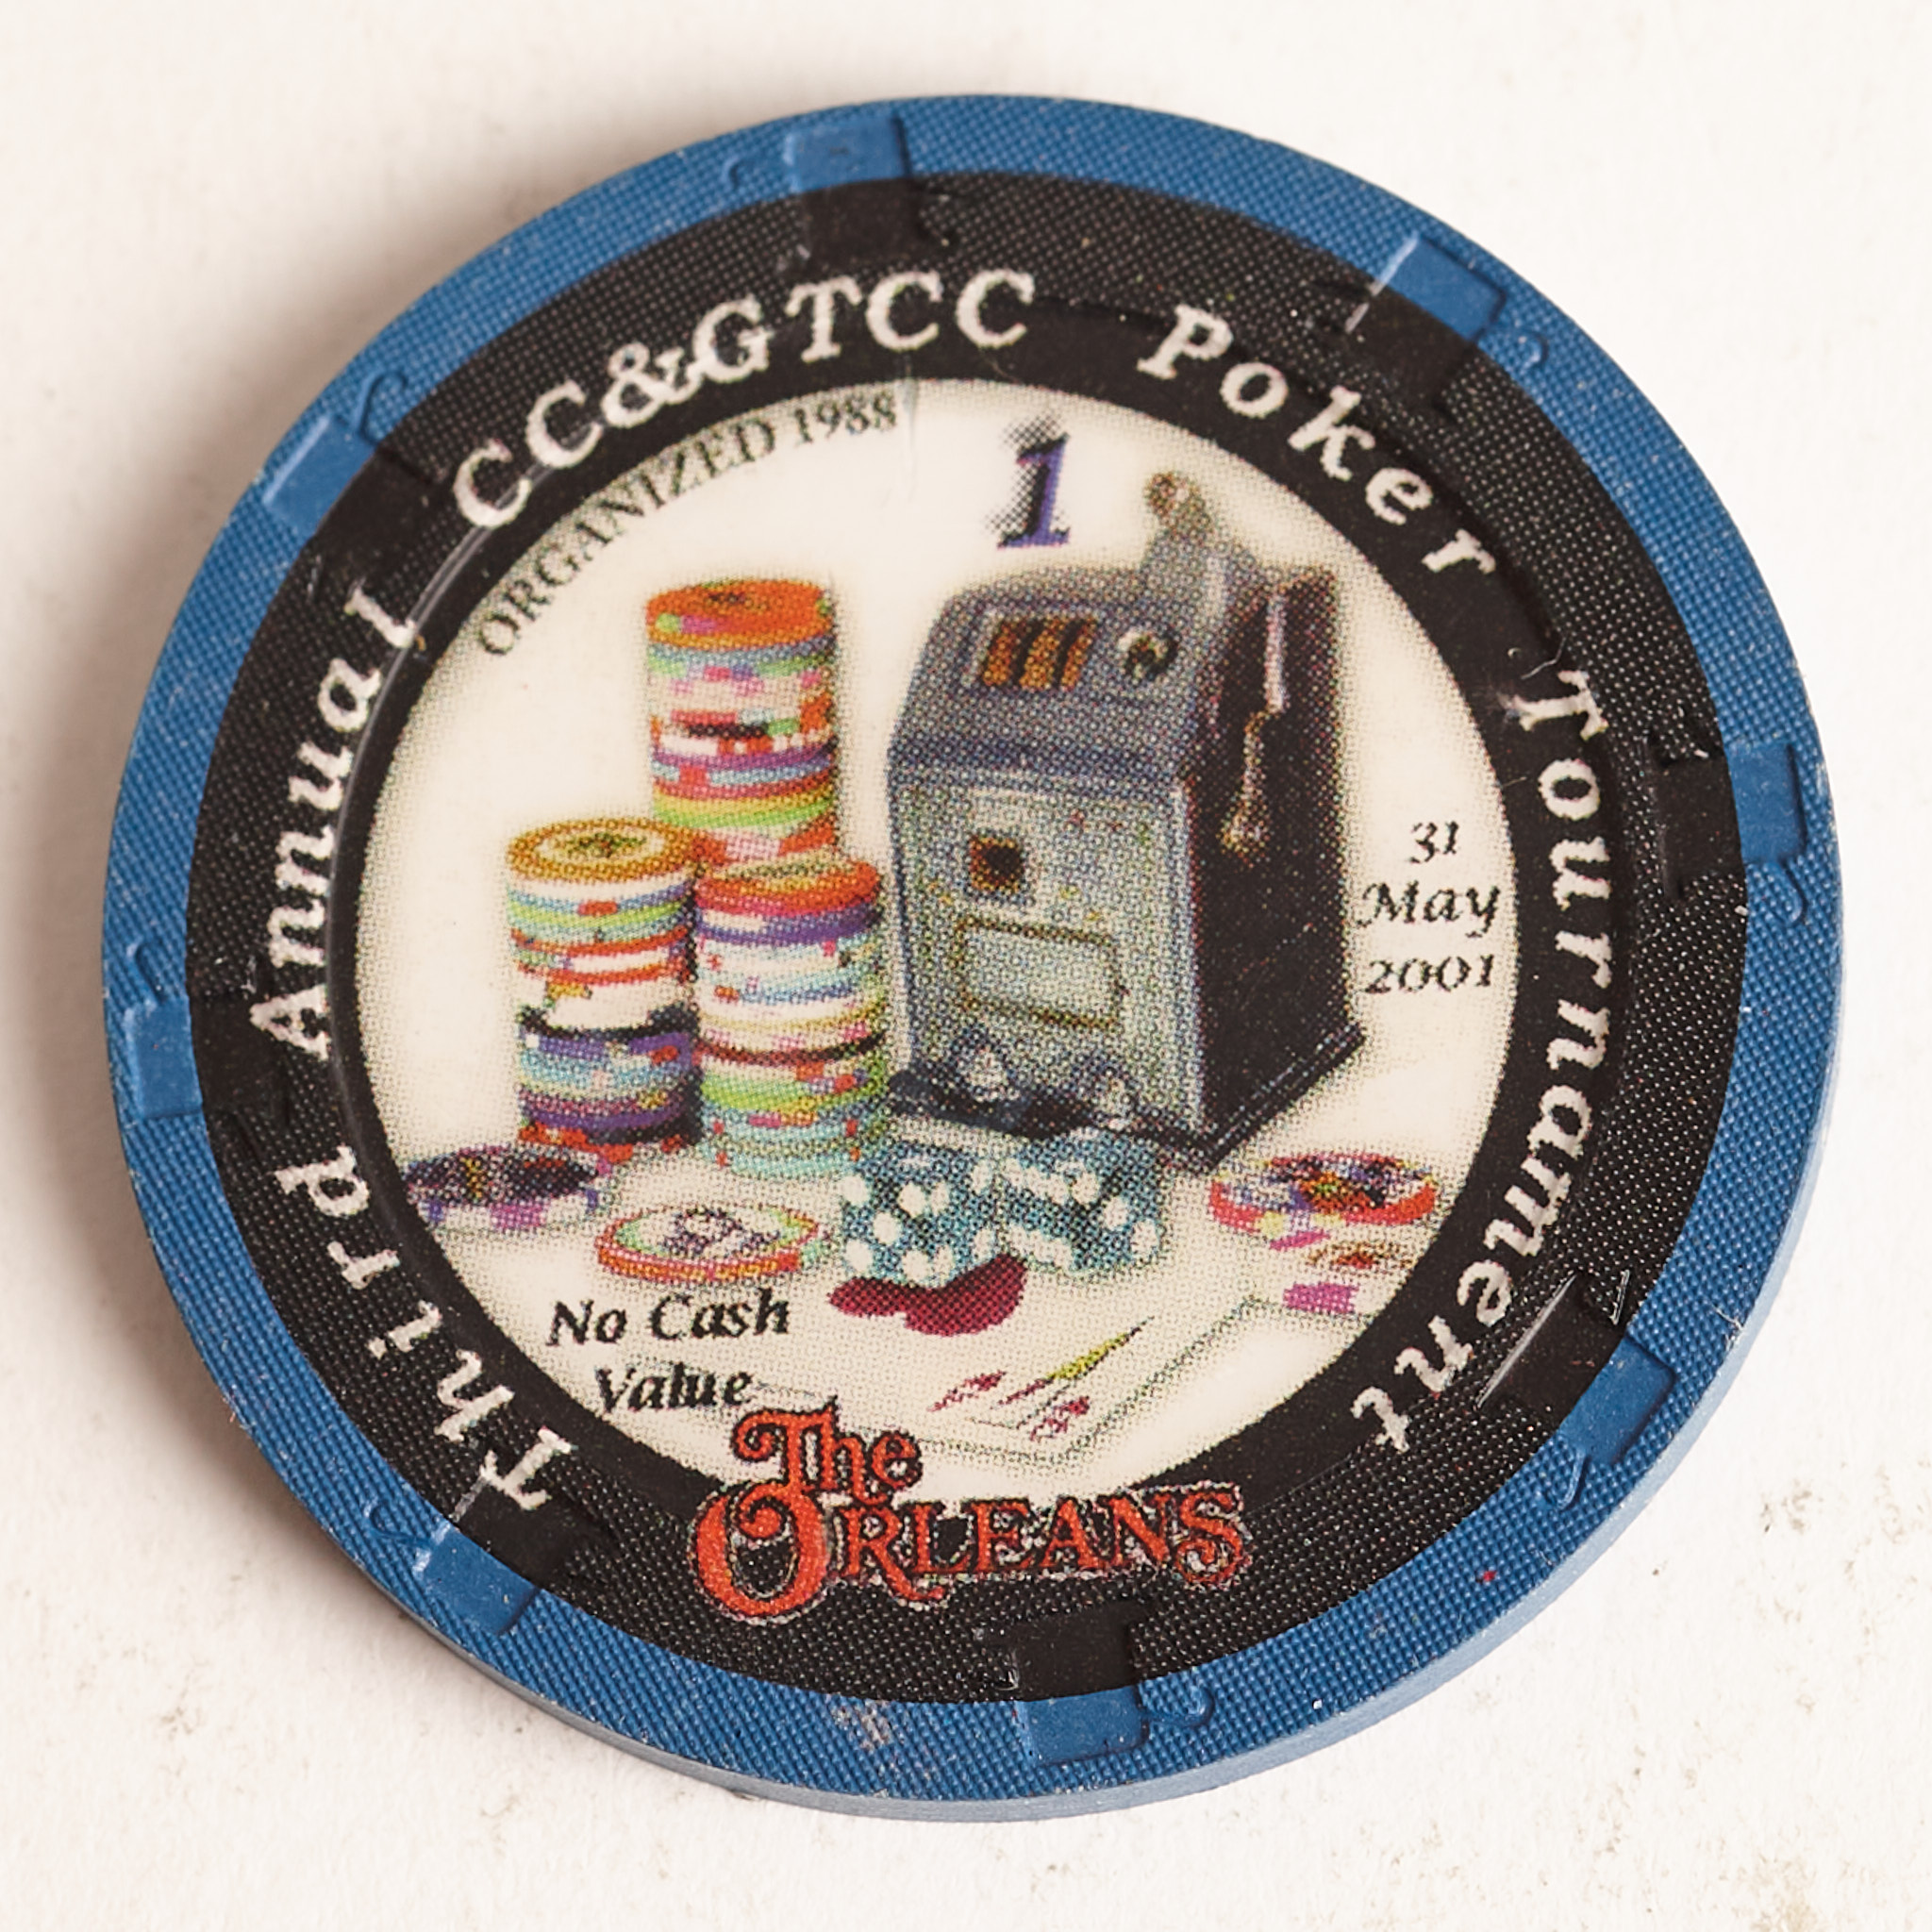 CC&GTCC 3rd ANNUAL POKER TOURNAMENT, 2001, Poker Card Guard Chip